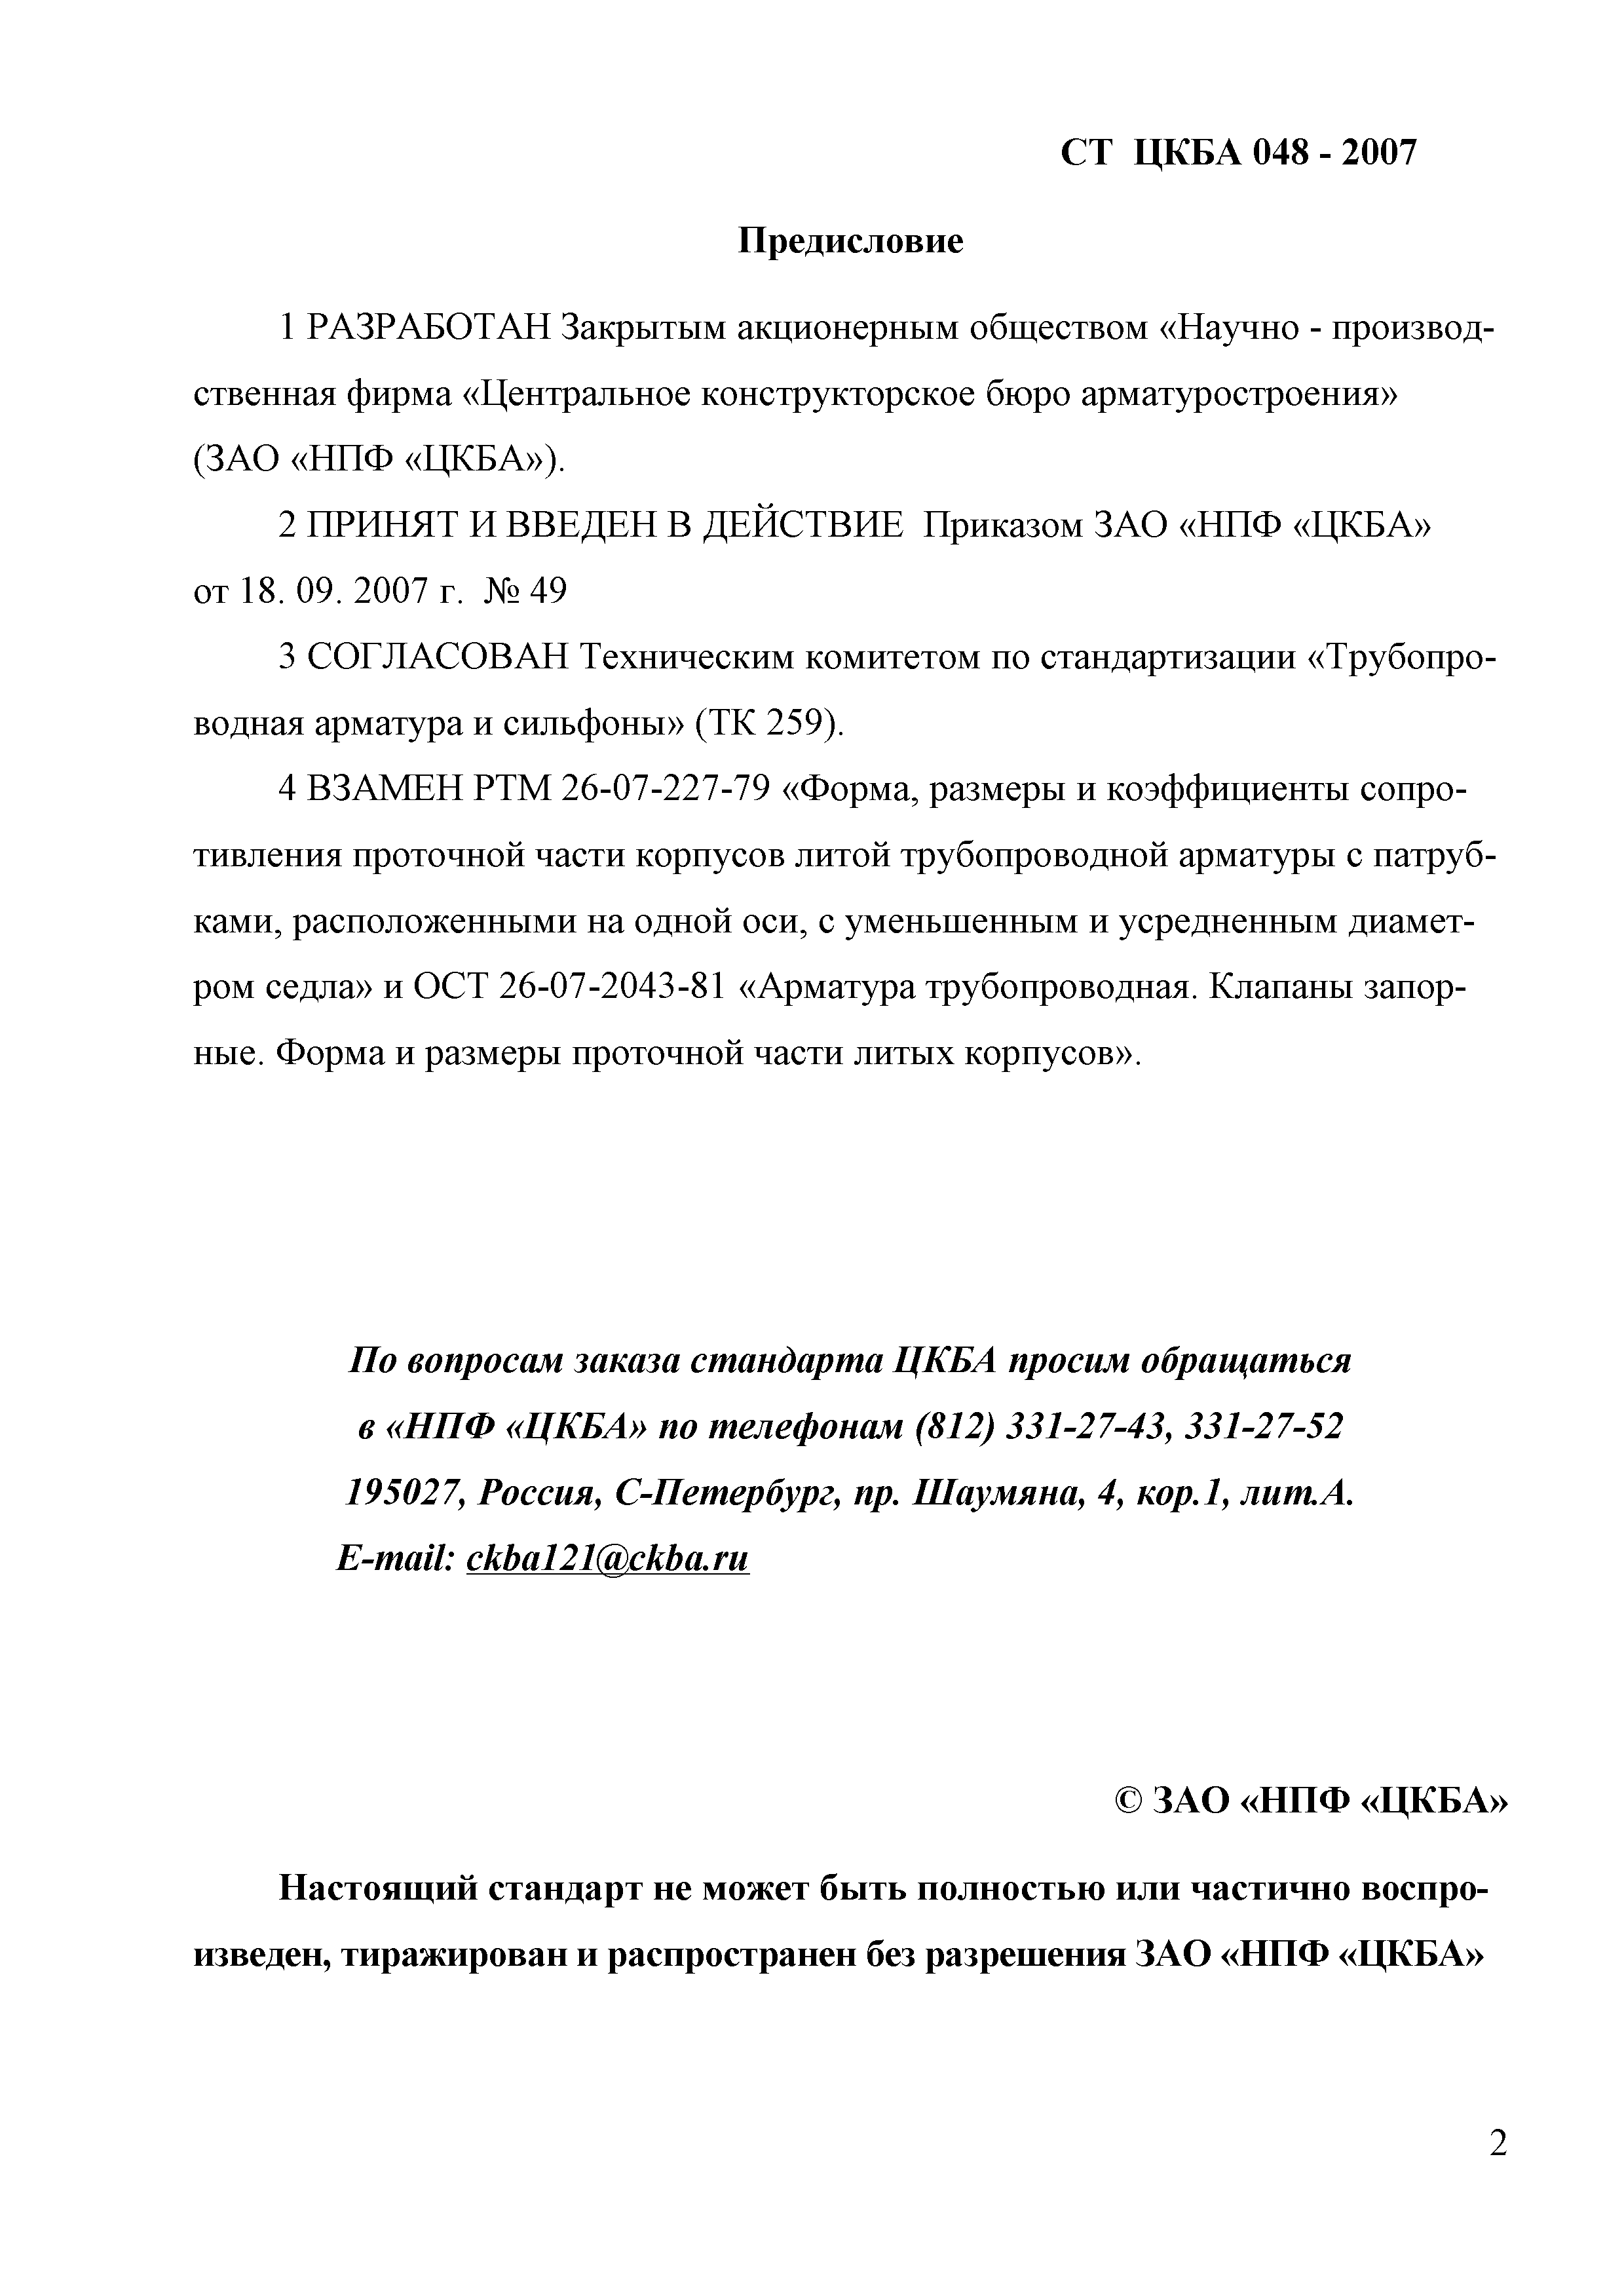 СТ ЦКБА 048-2007